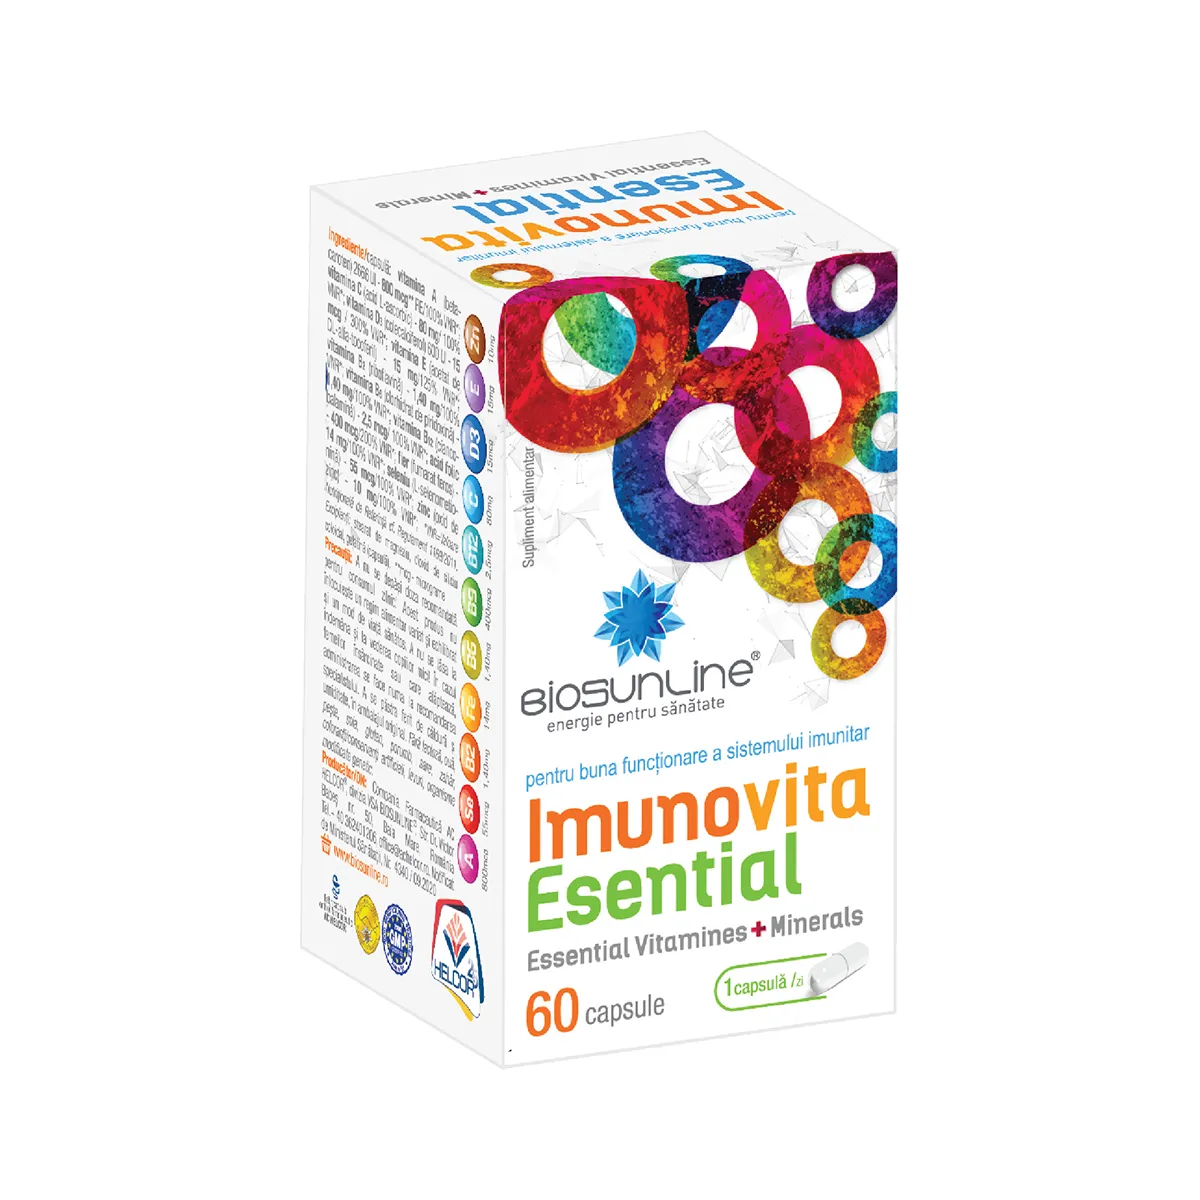 Imunovita Esential, 60 comprimate, BioSunLine